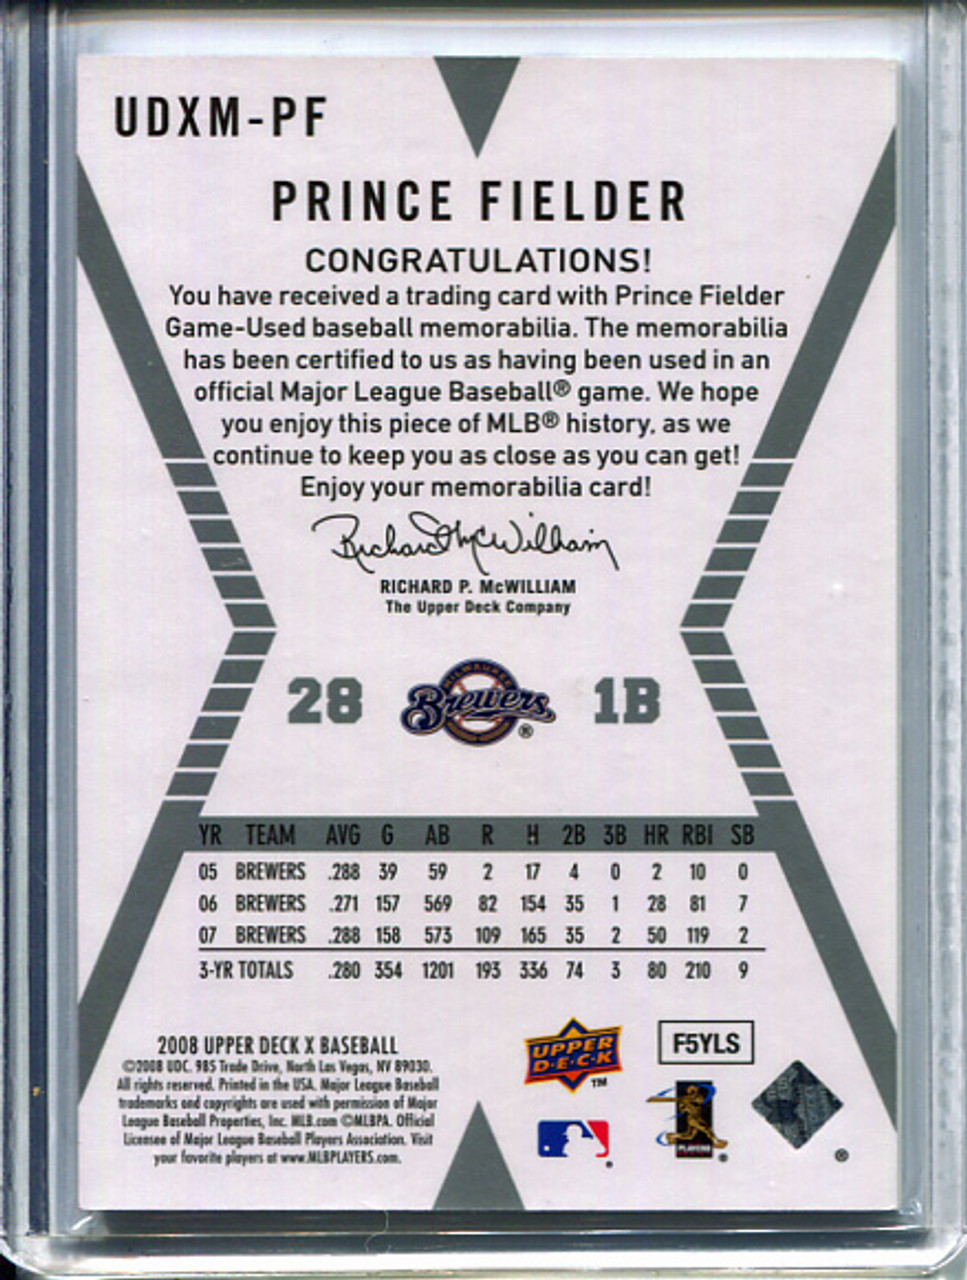 Prince Fielder 2008 Upper Deck X, Memorabilia #UDXM-PF